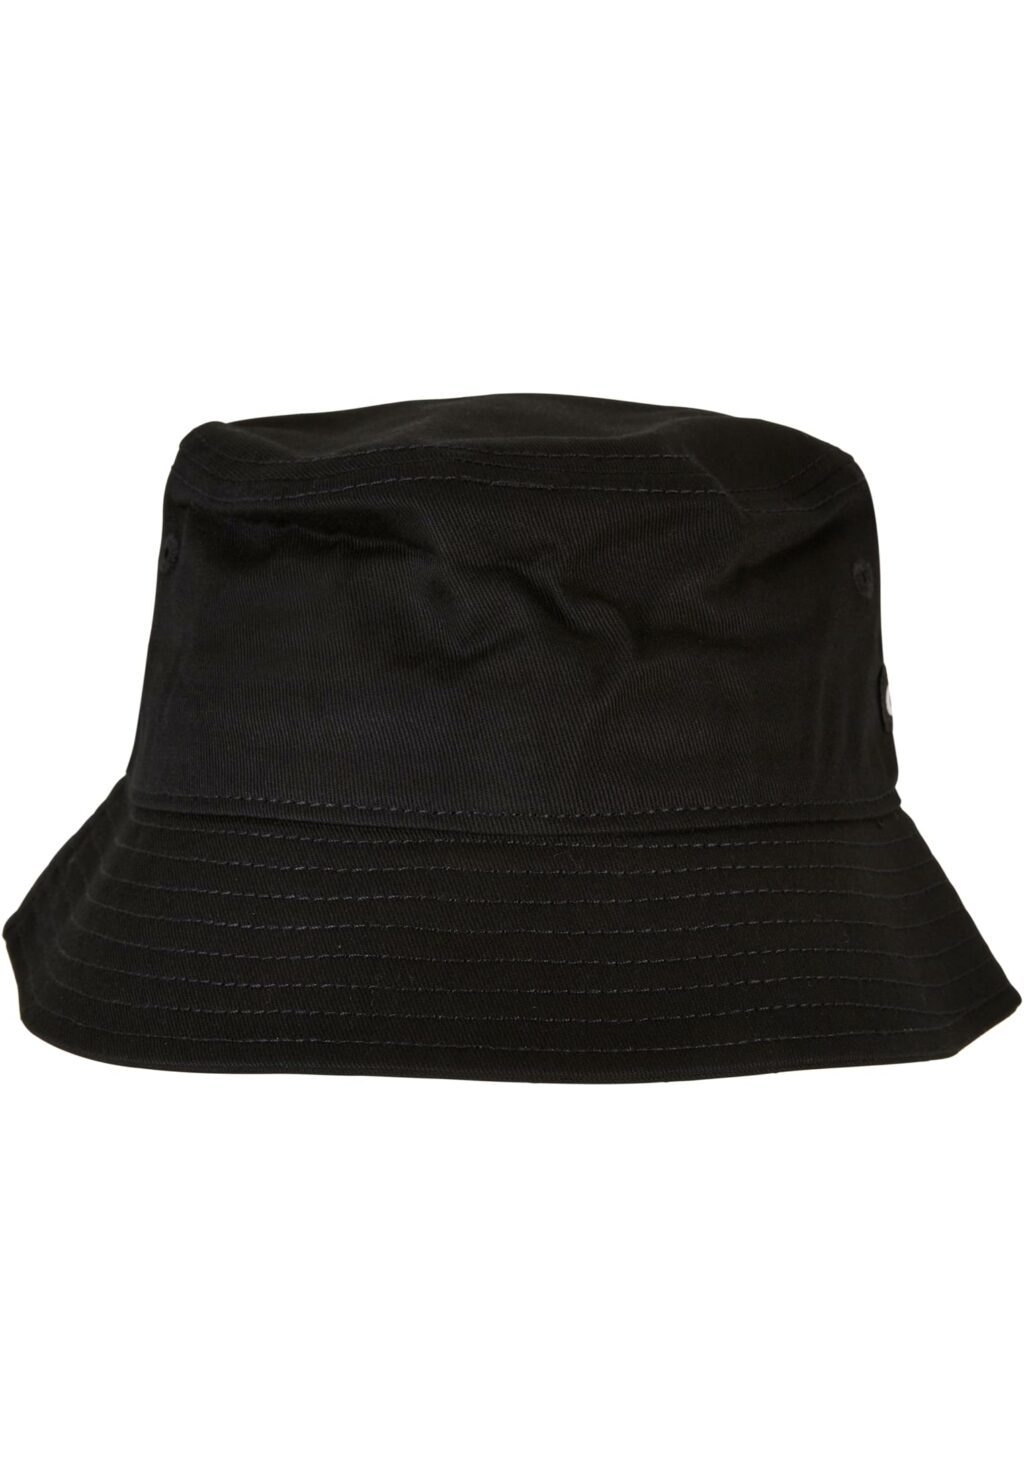 Cayler Basic Bucket Hat blk/neonyellow one CS2710